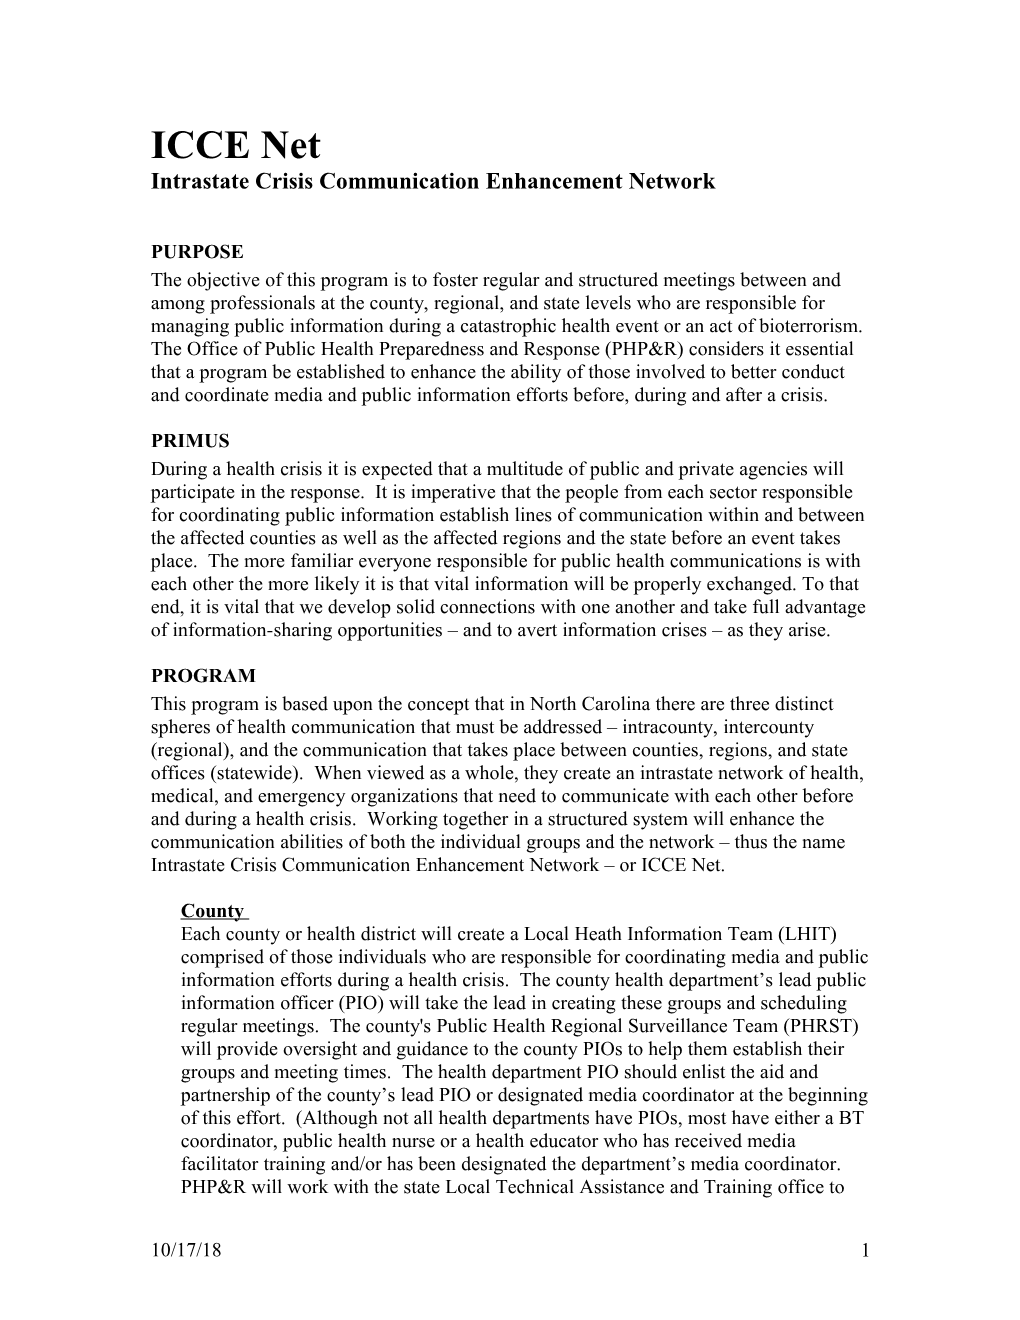 Intrastate Crisis Communication Enhancement Network